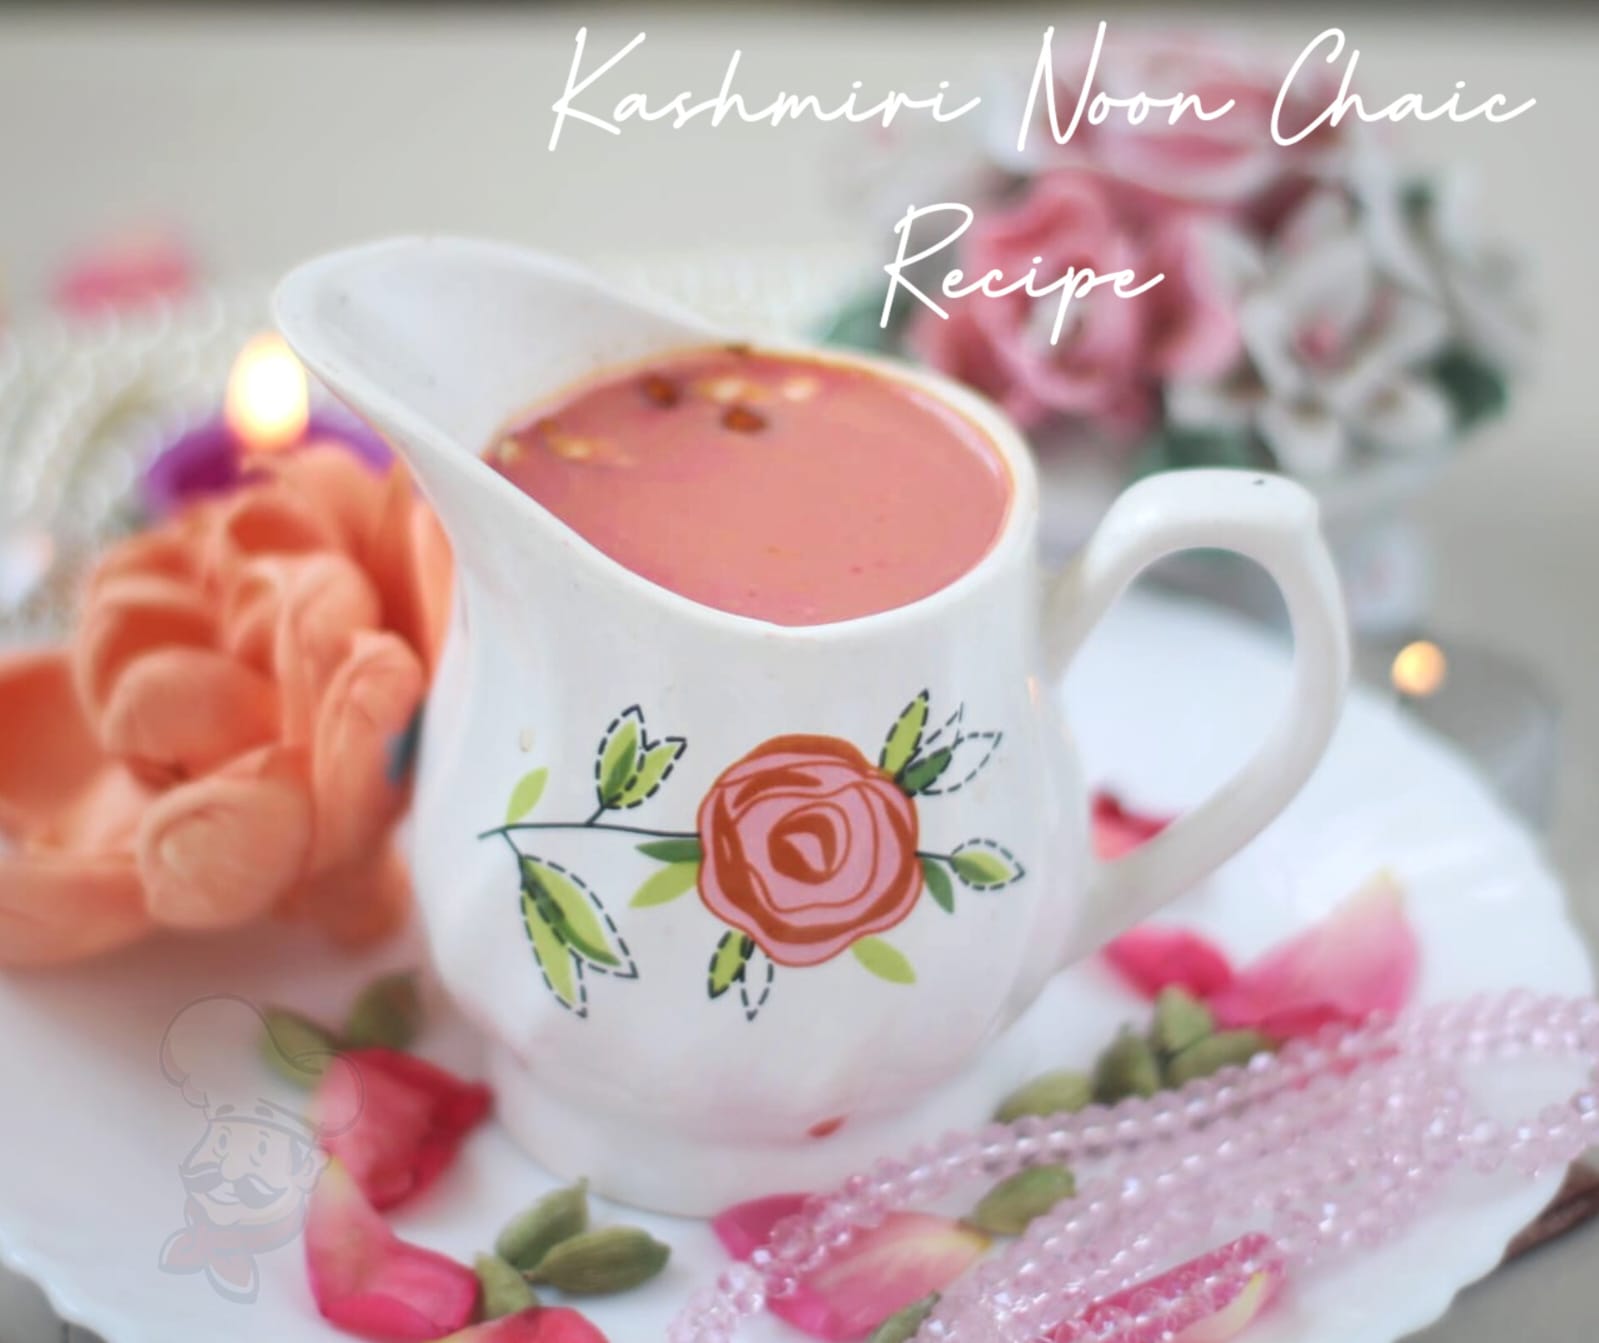 kashmiri sheer chai recipe